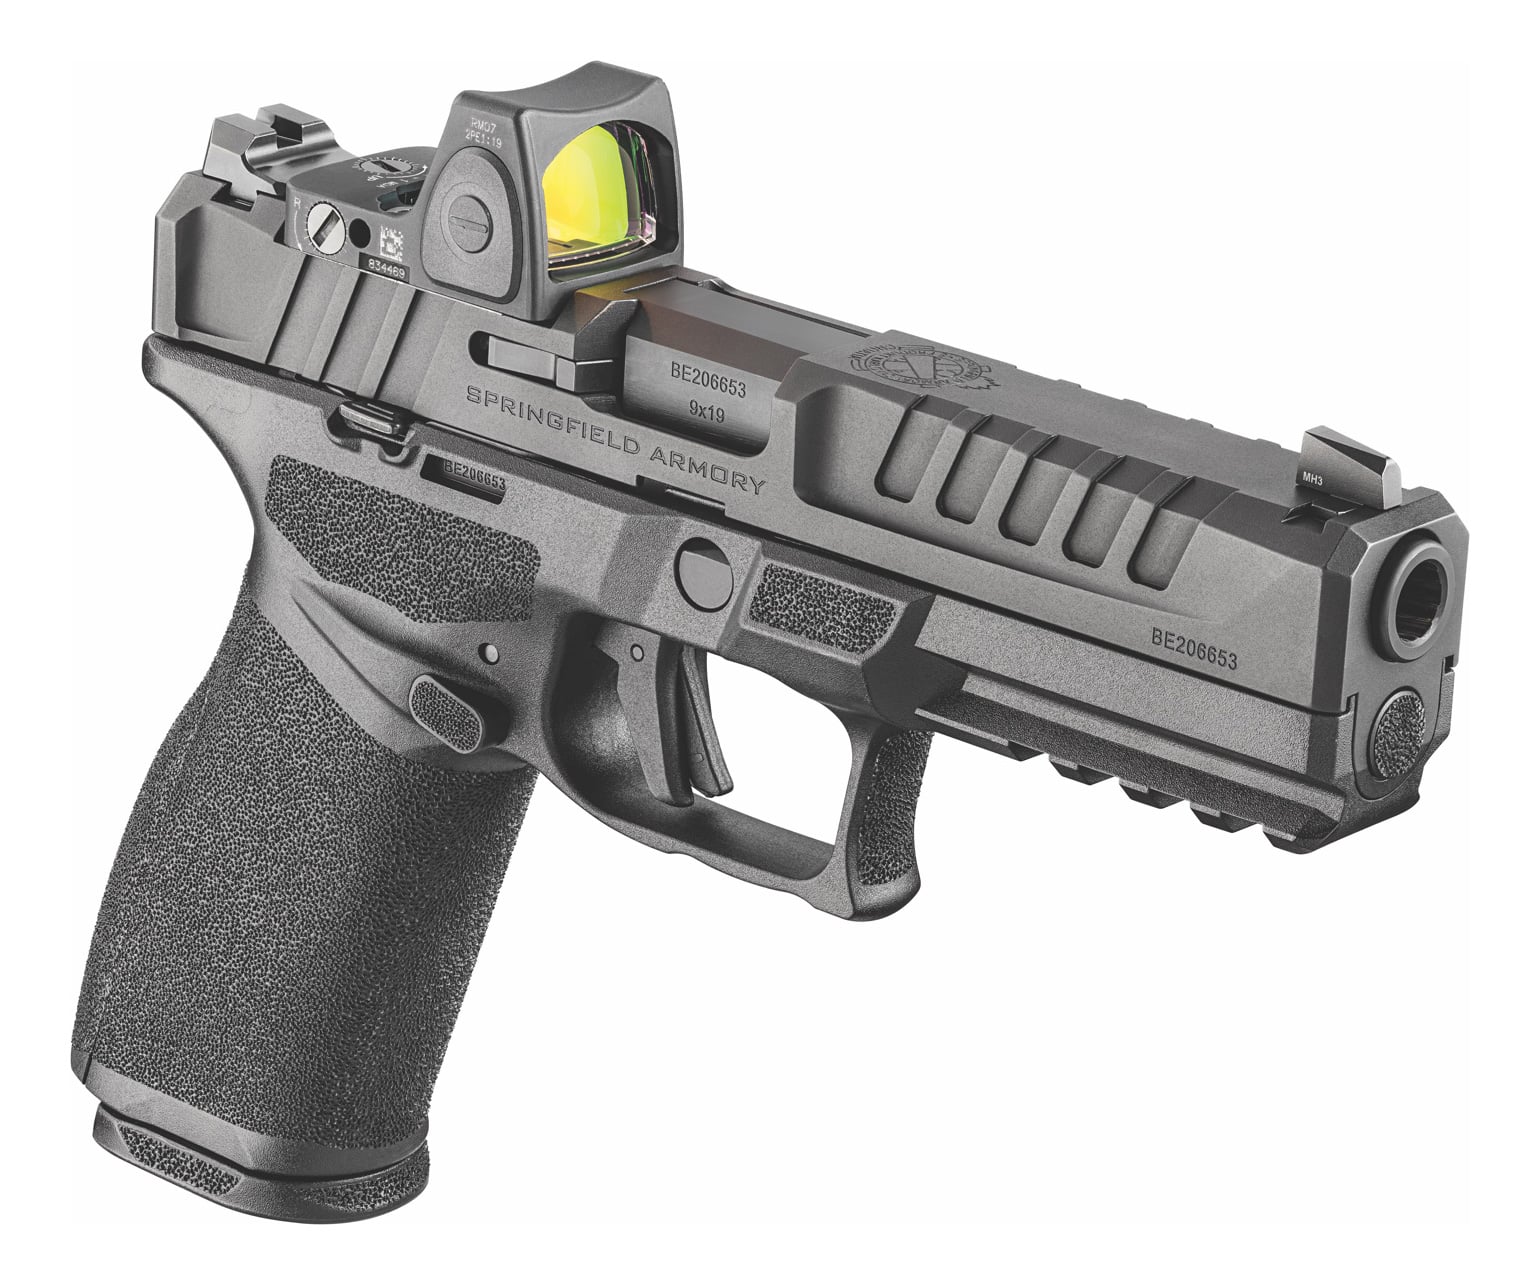 Springfield Echelon duty pistol with optic